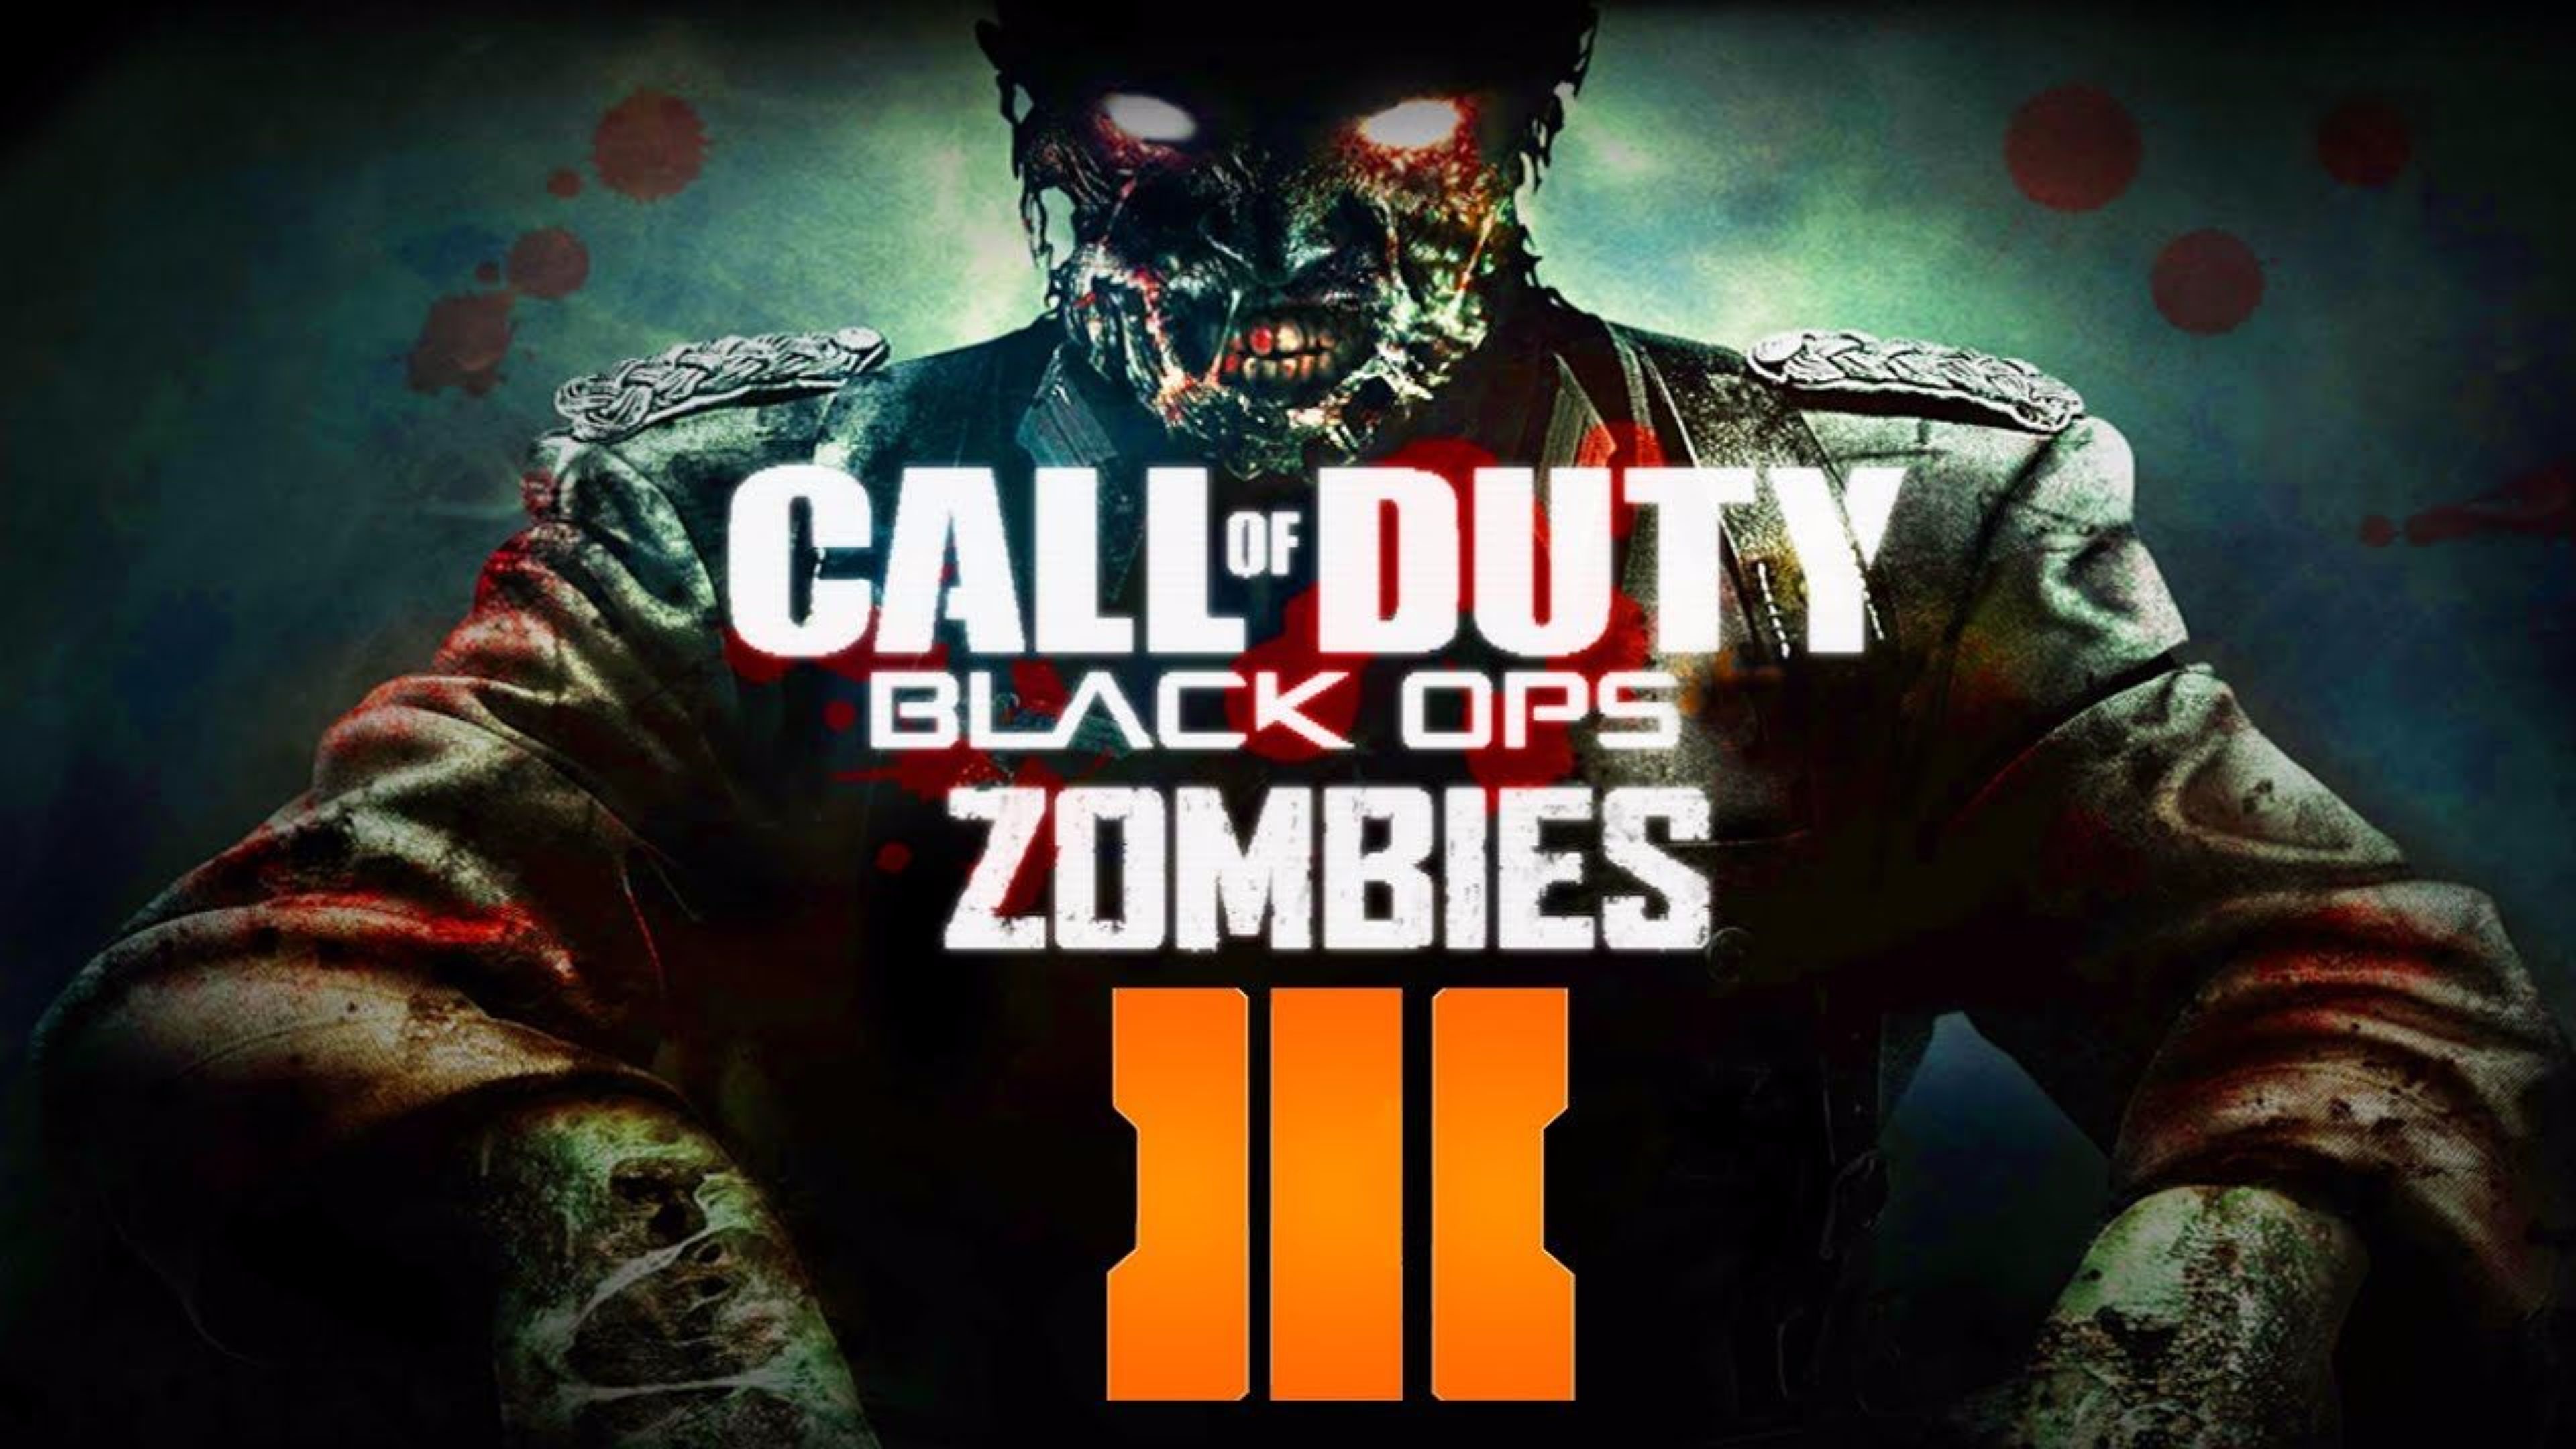 Zombies Call of Duty Black Ops 3 4K Wallpaper | Free 4K Wallpaper